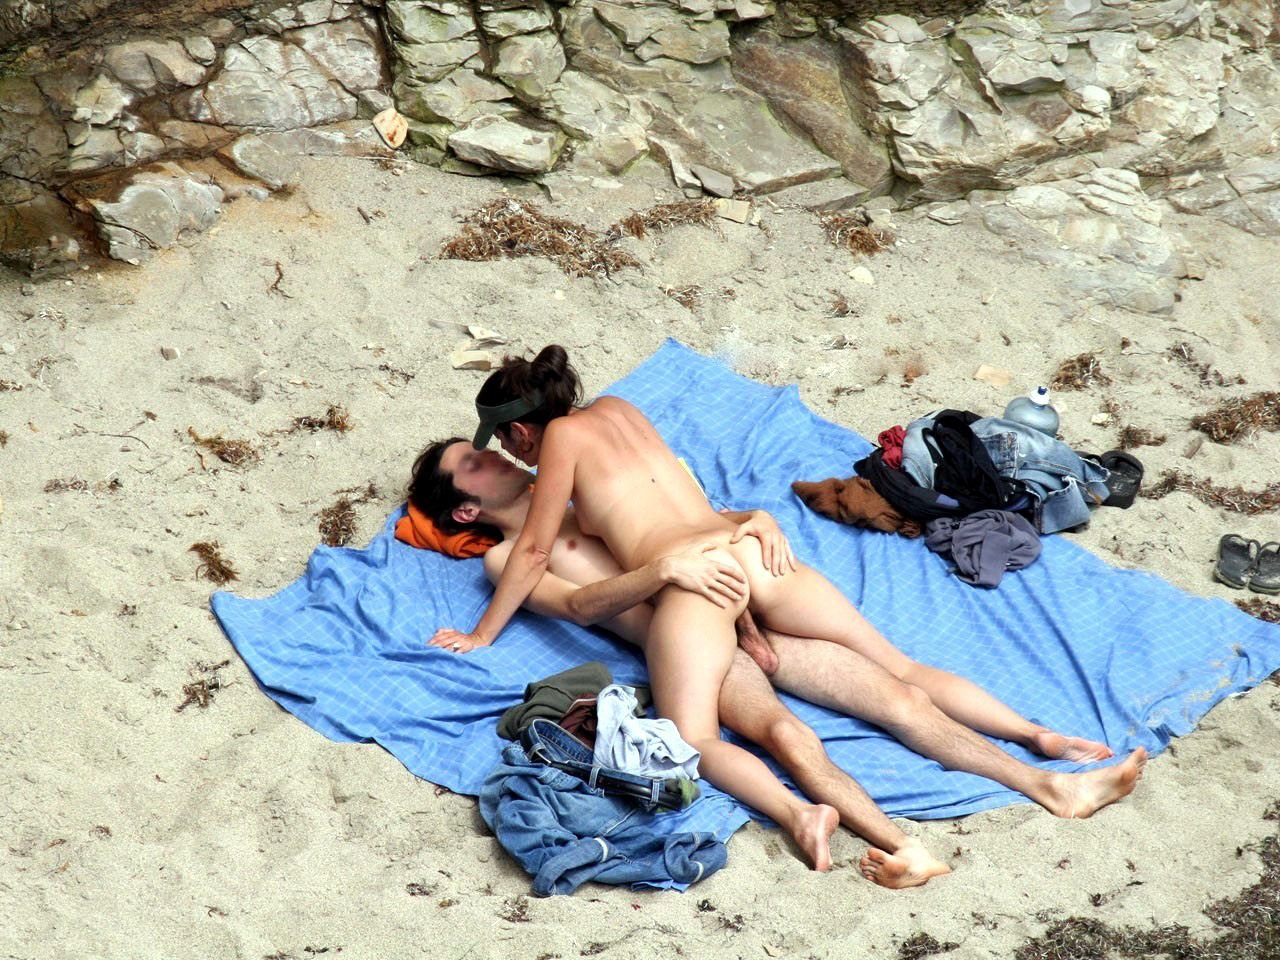 Hidden camera on the nudist beach hq pic